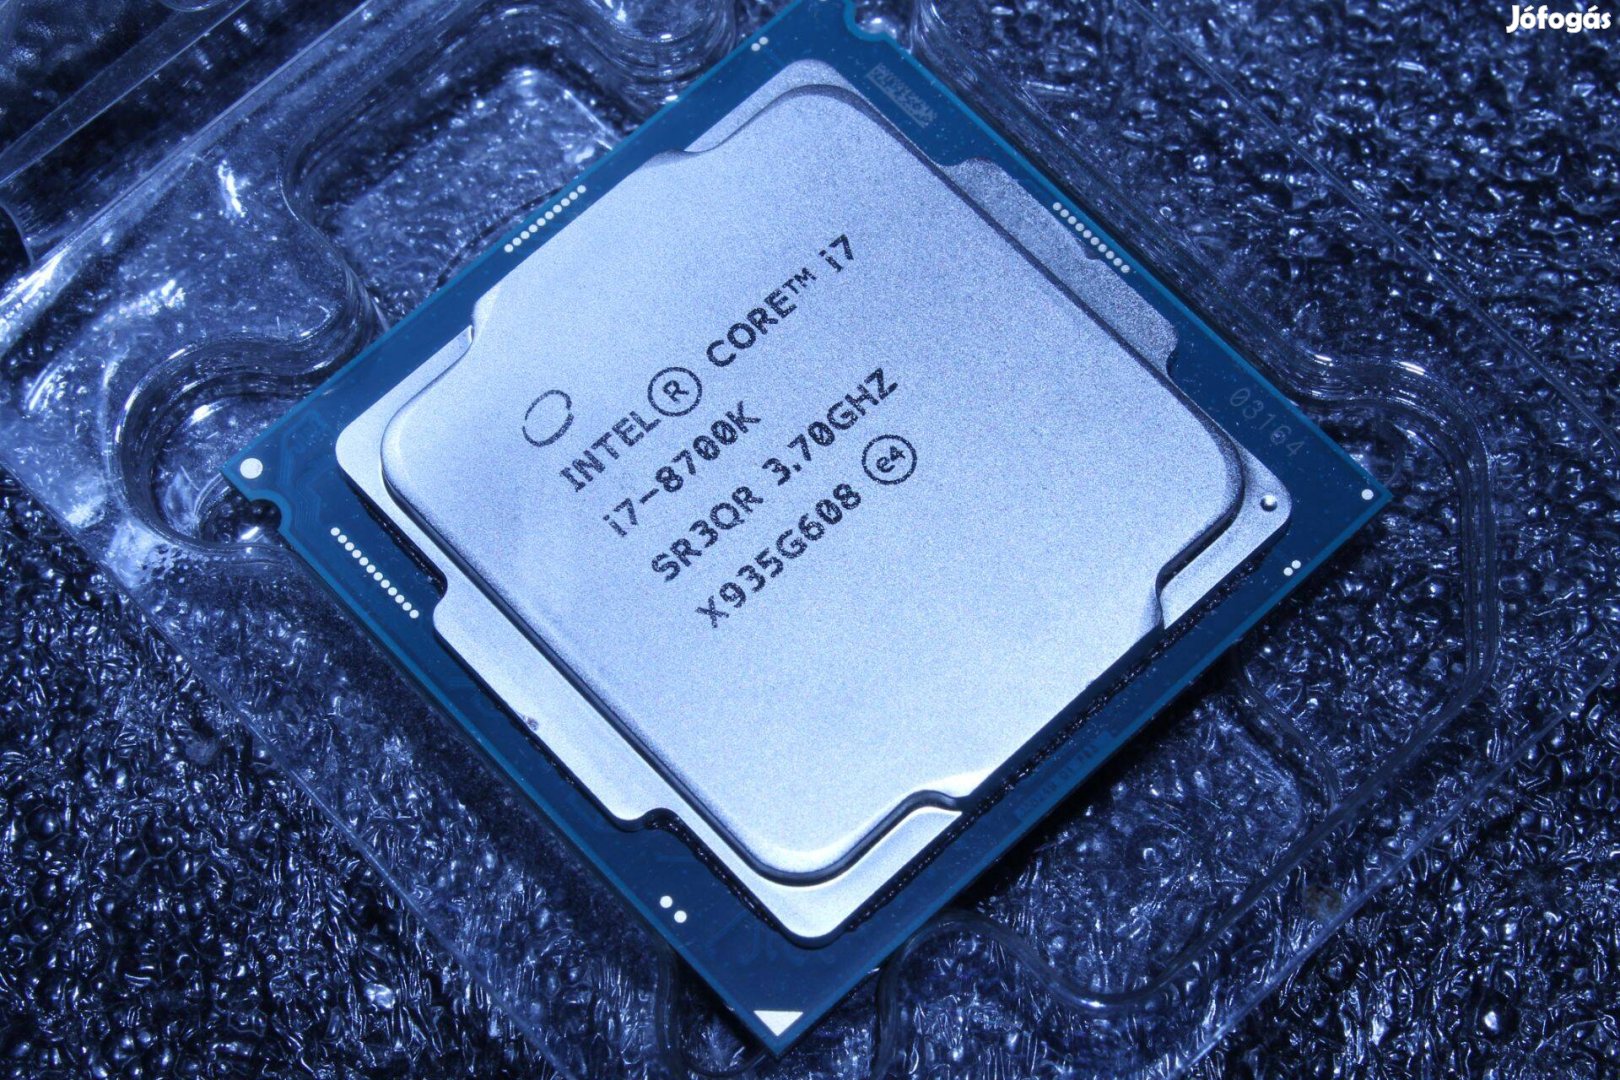 Intel I7-8700K / 1151 V2 / I7 8700 hatmagos processzor